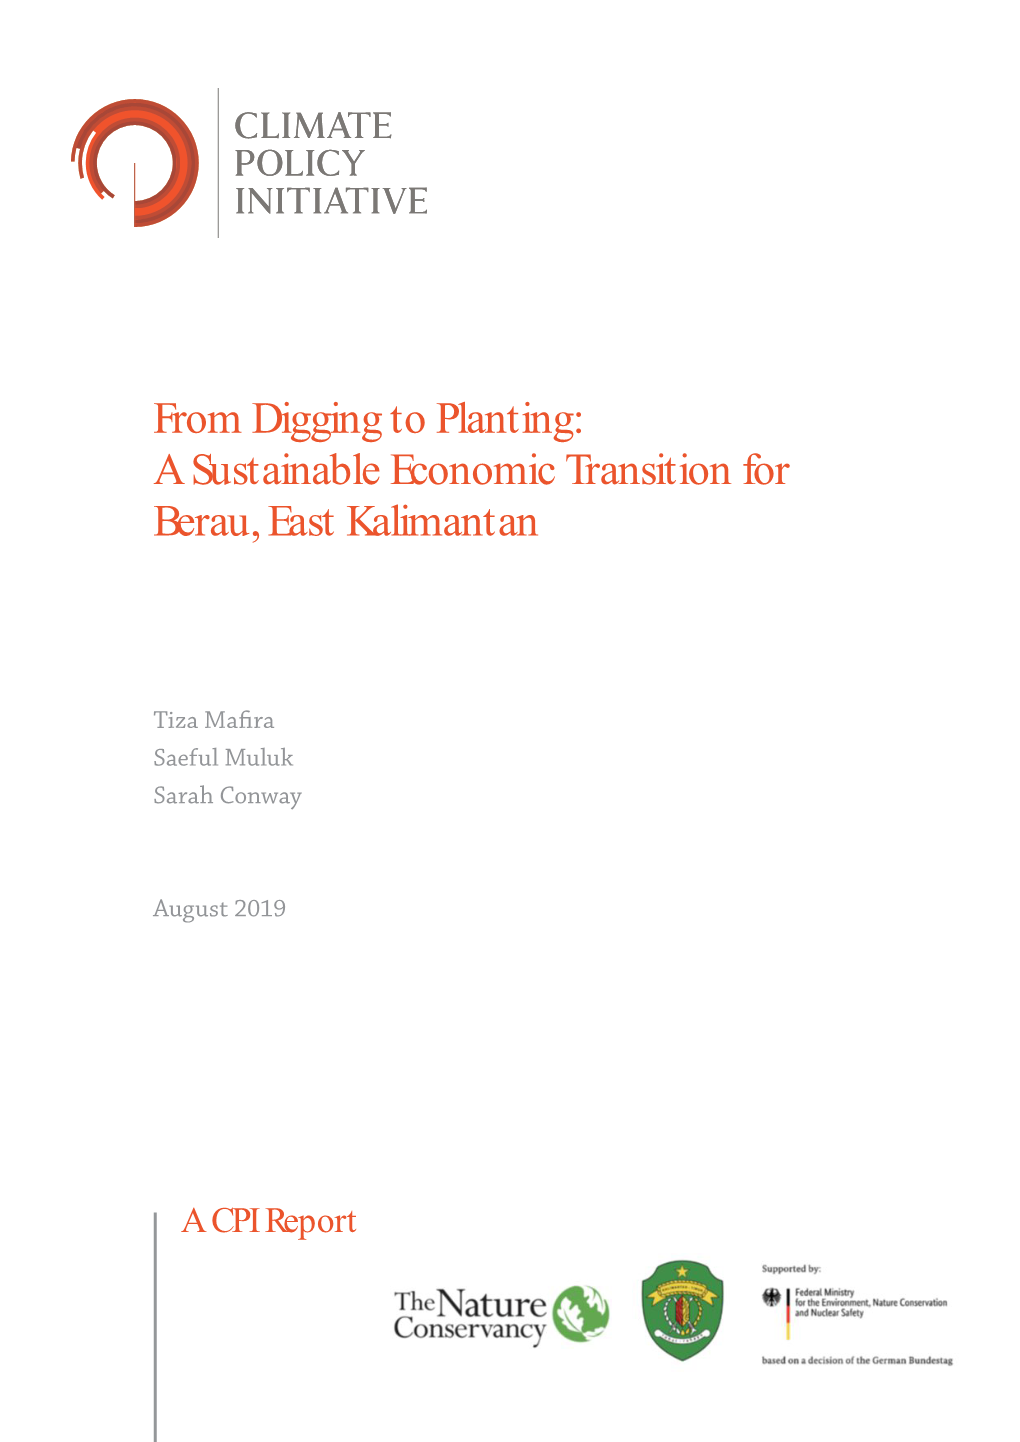 A Sustainable Economic Transition for Berau, East Kalimantan